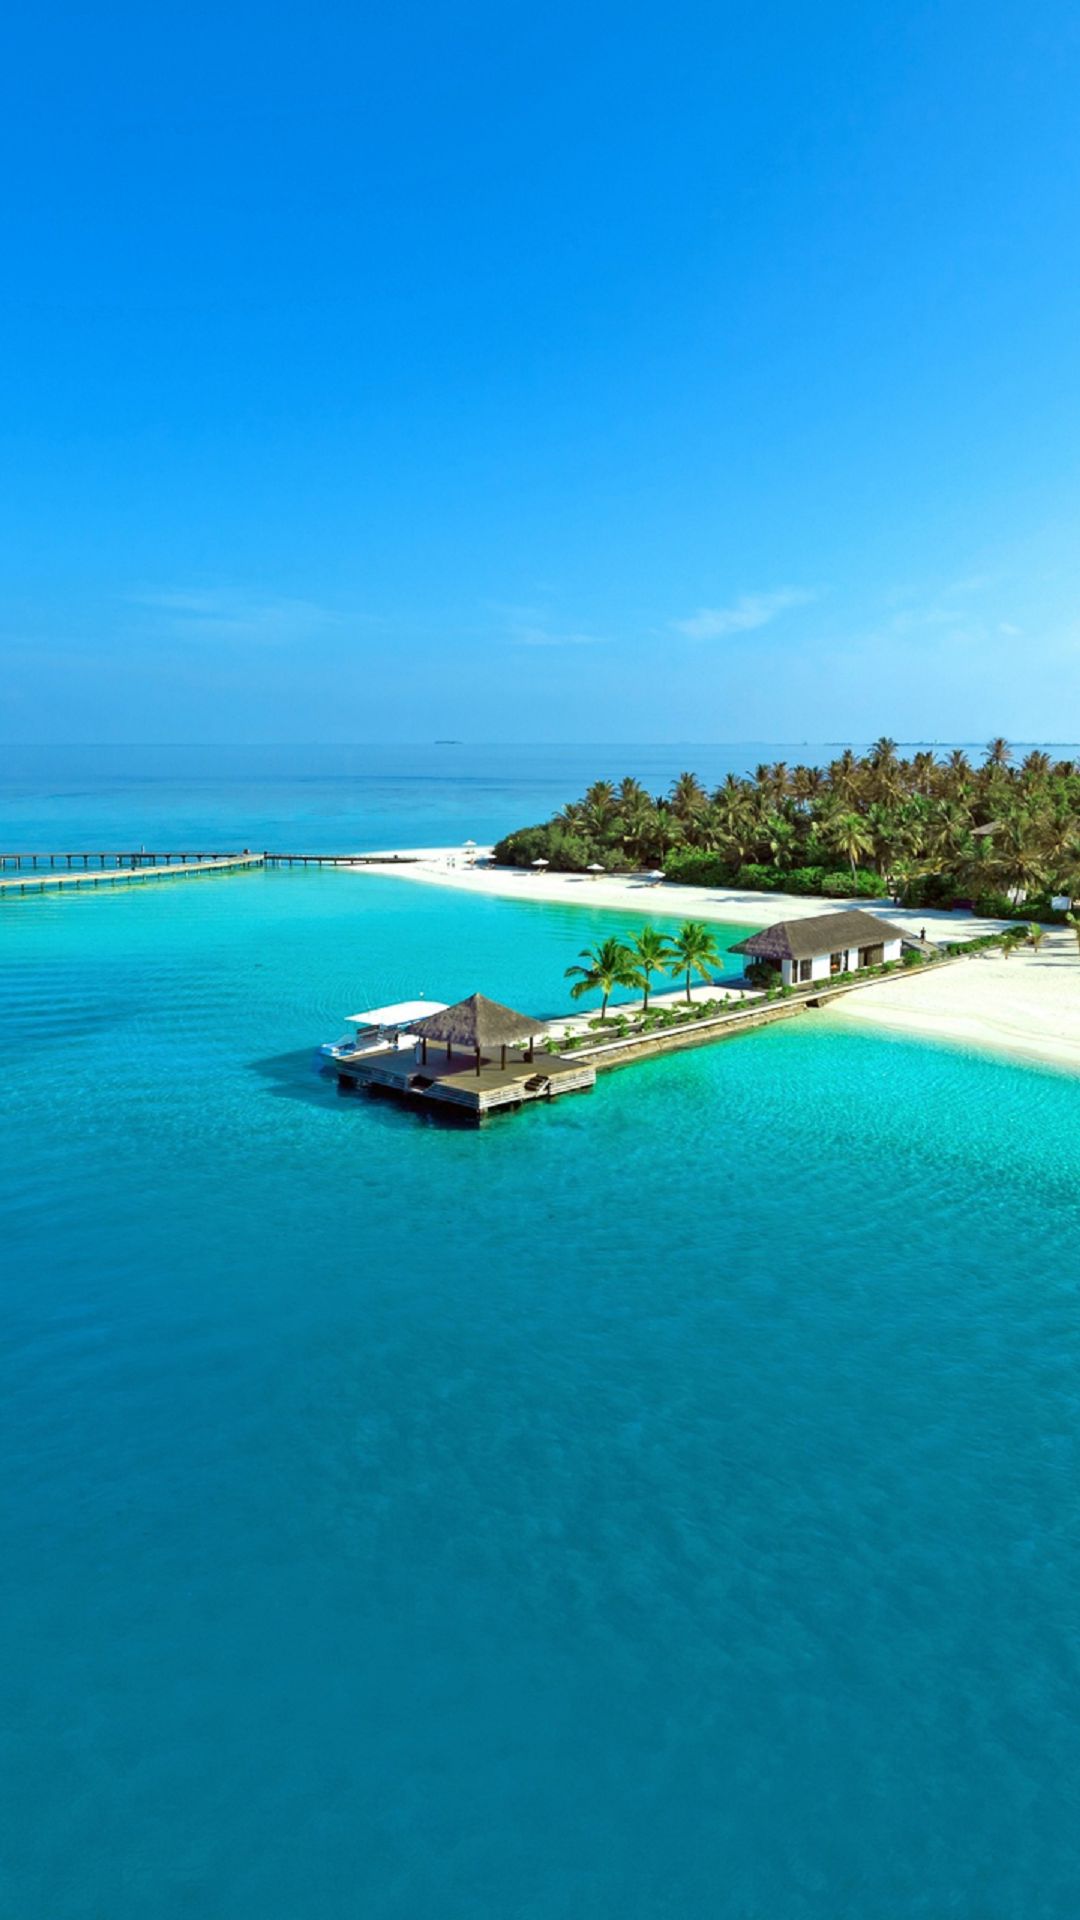 Maldives Resort Light Blue Sea Island Iphone 6 Plus Hd Wallpaper Ipod